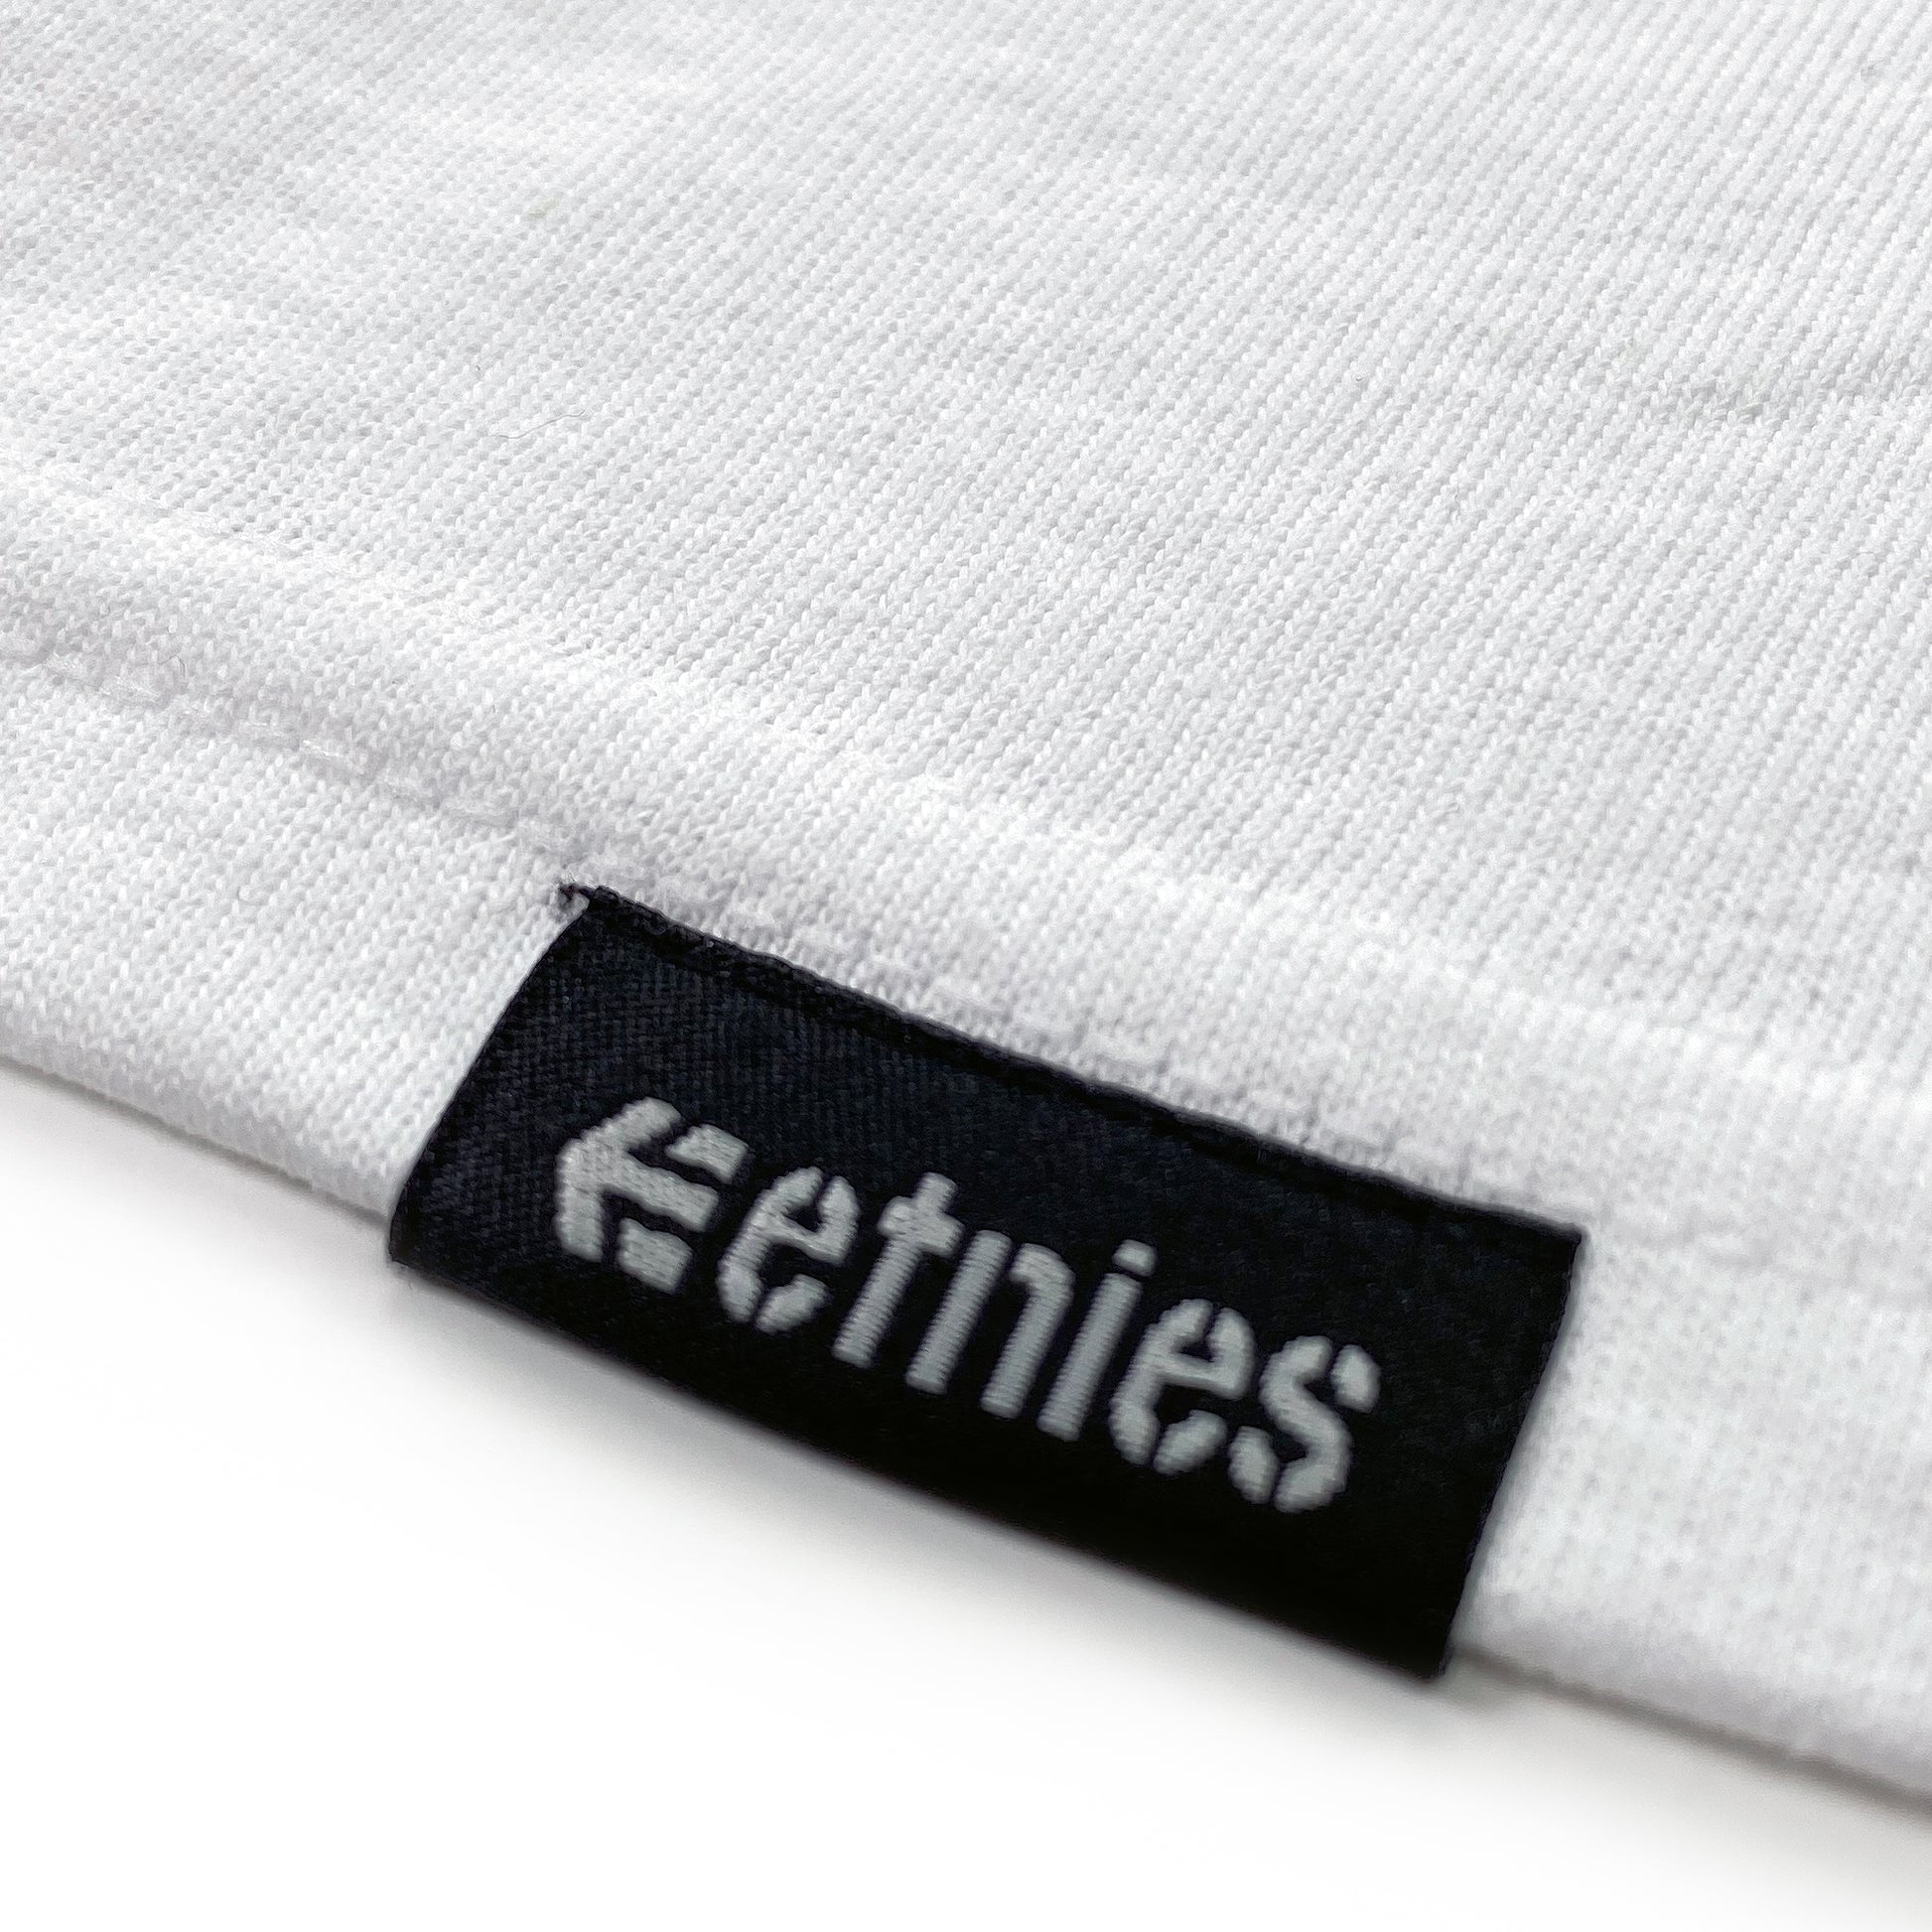 Etnies Retro SS T-shirt - White - Prime Delux Store